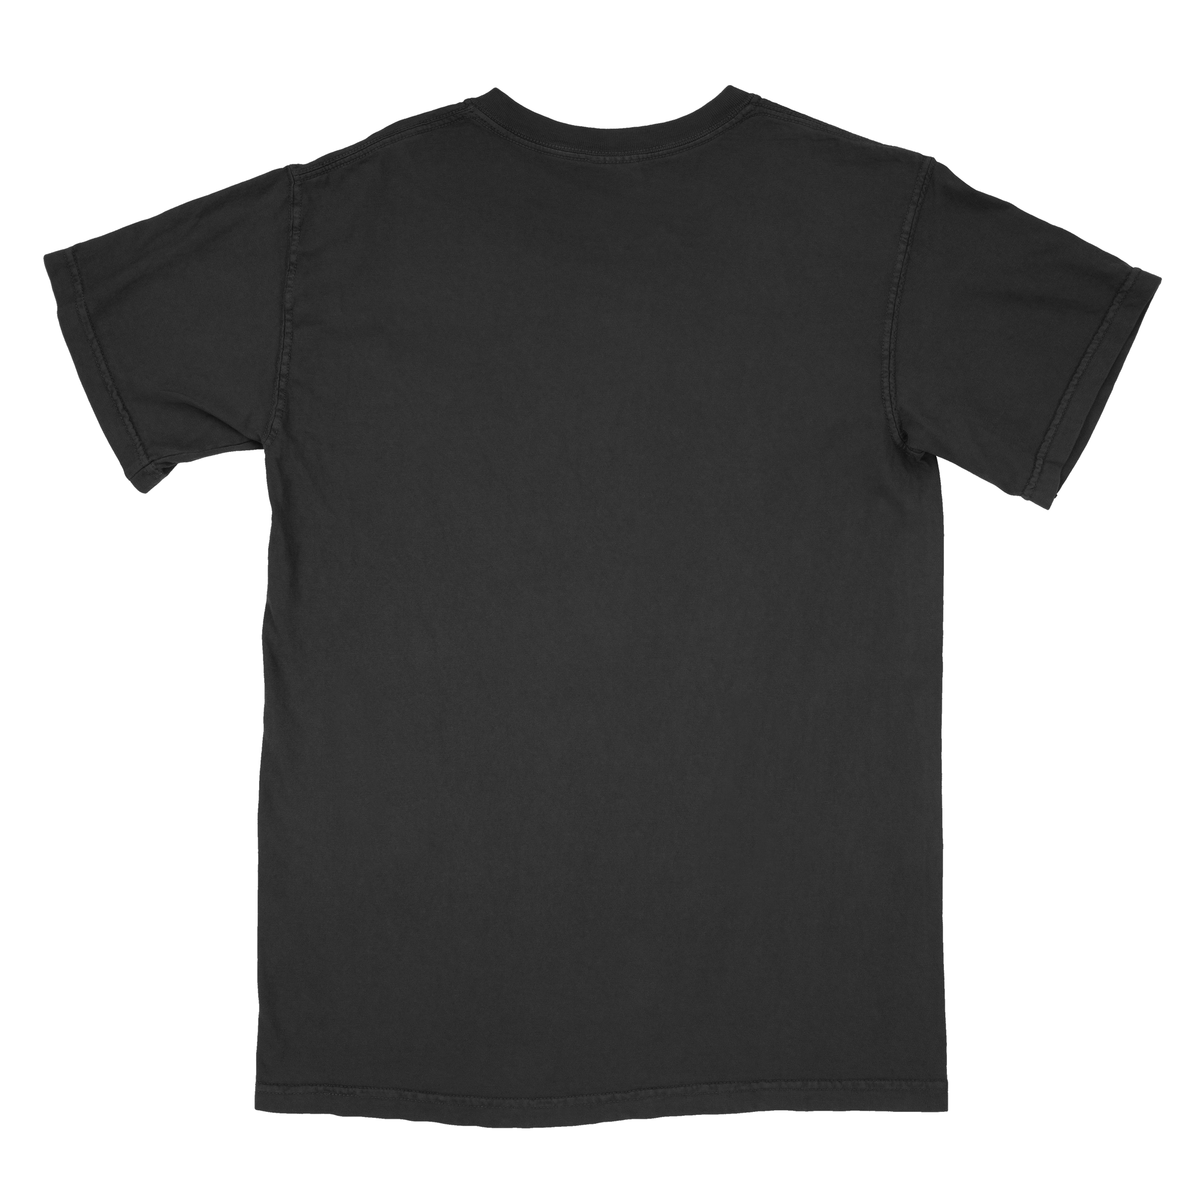 Black comfort colors shirt (preorder) – Dungeon Ruins